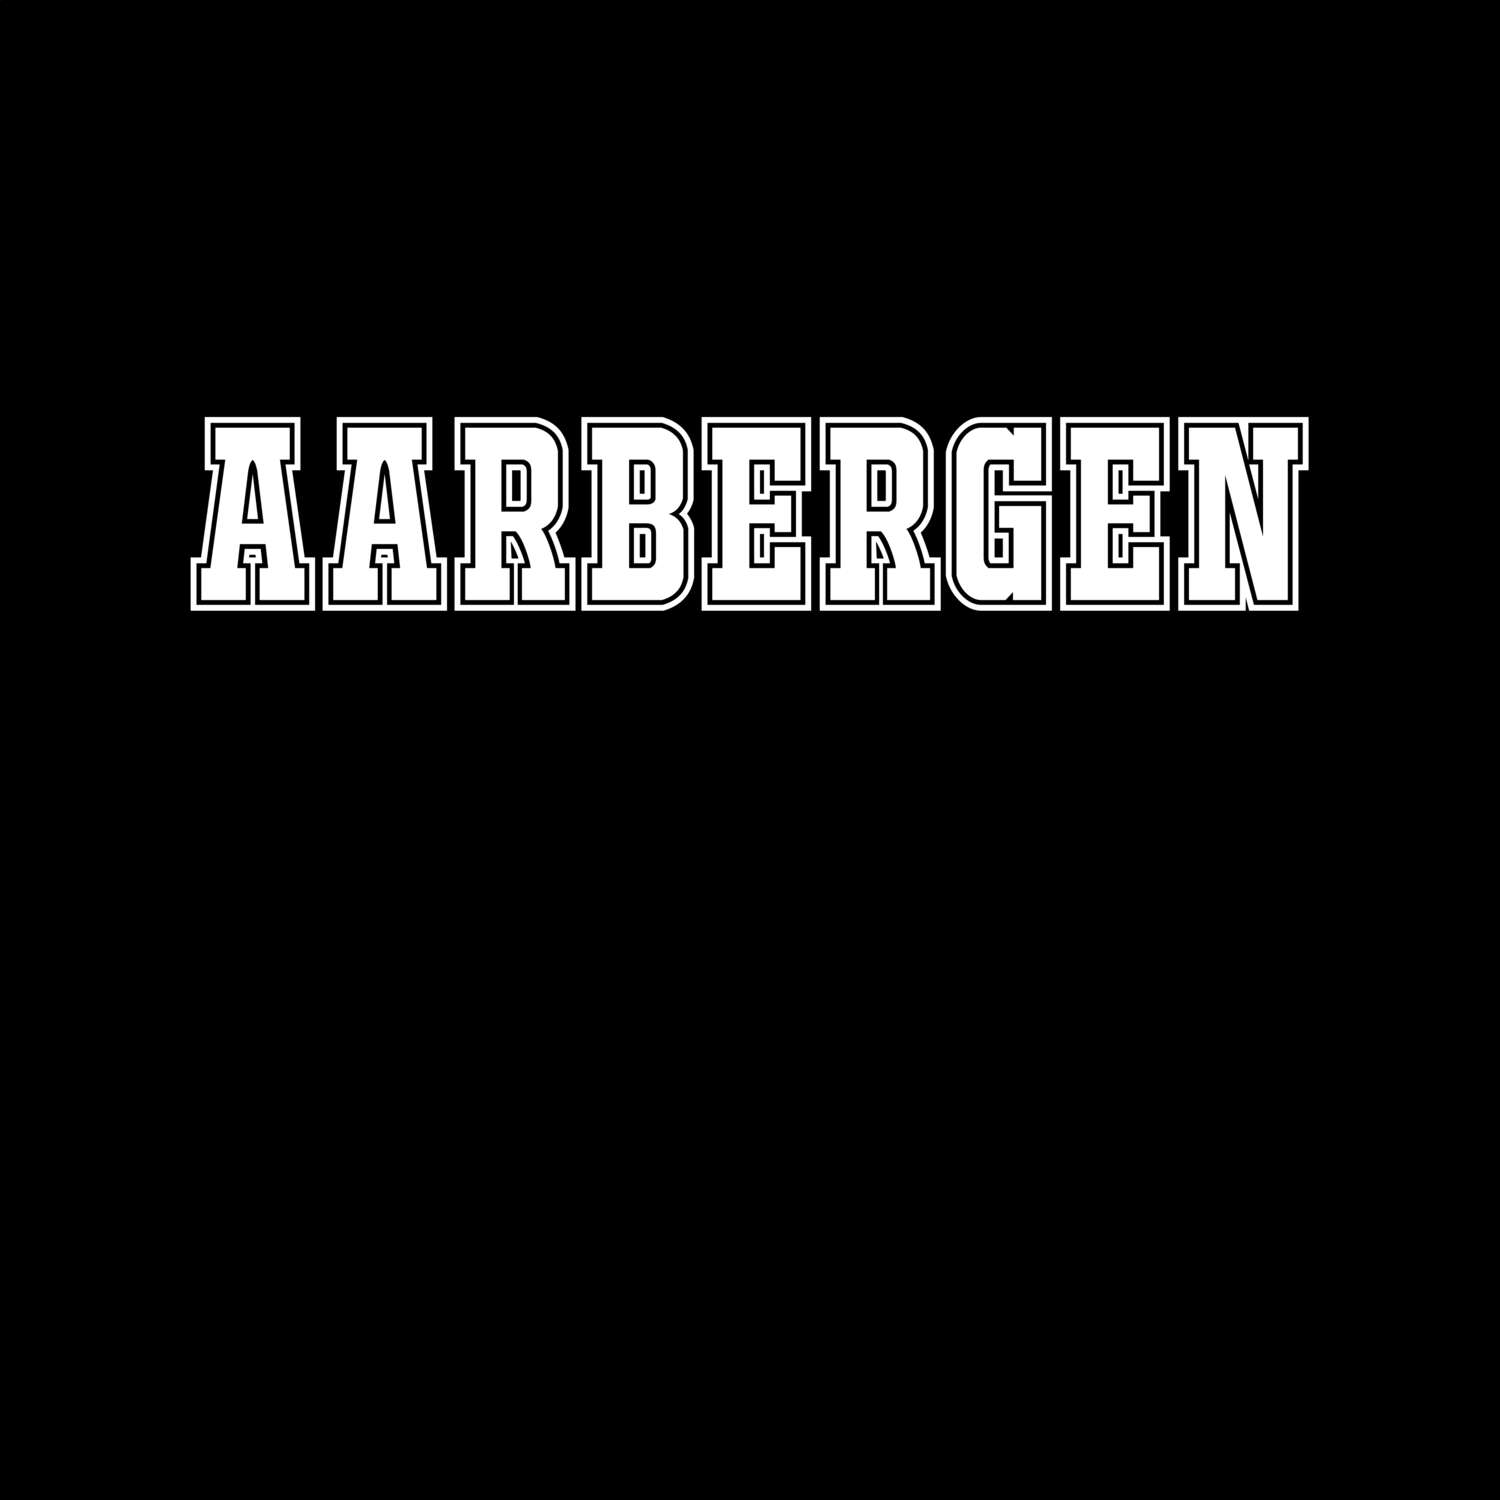 Aarbergen T-Shirt »Classic«